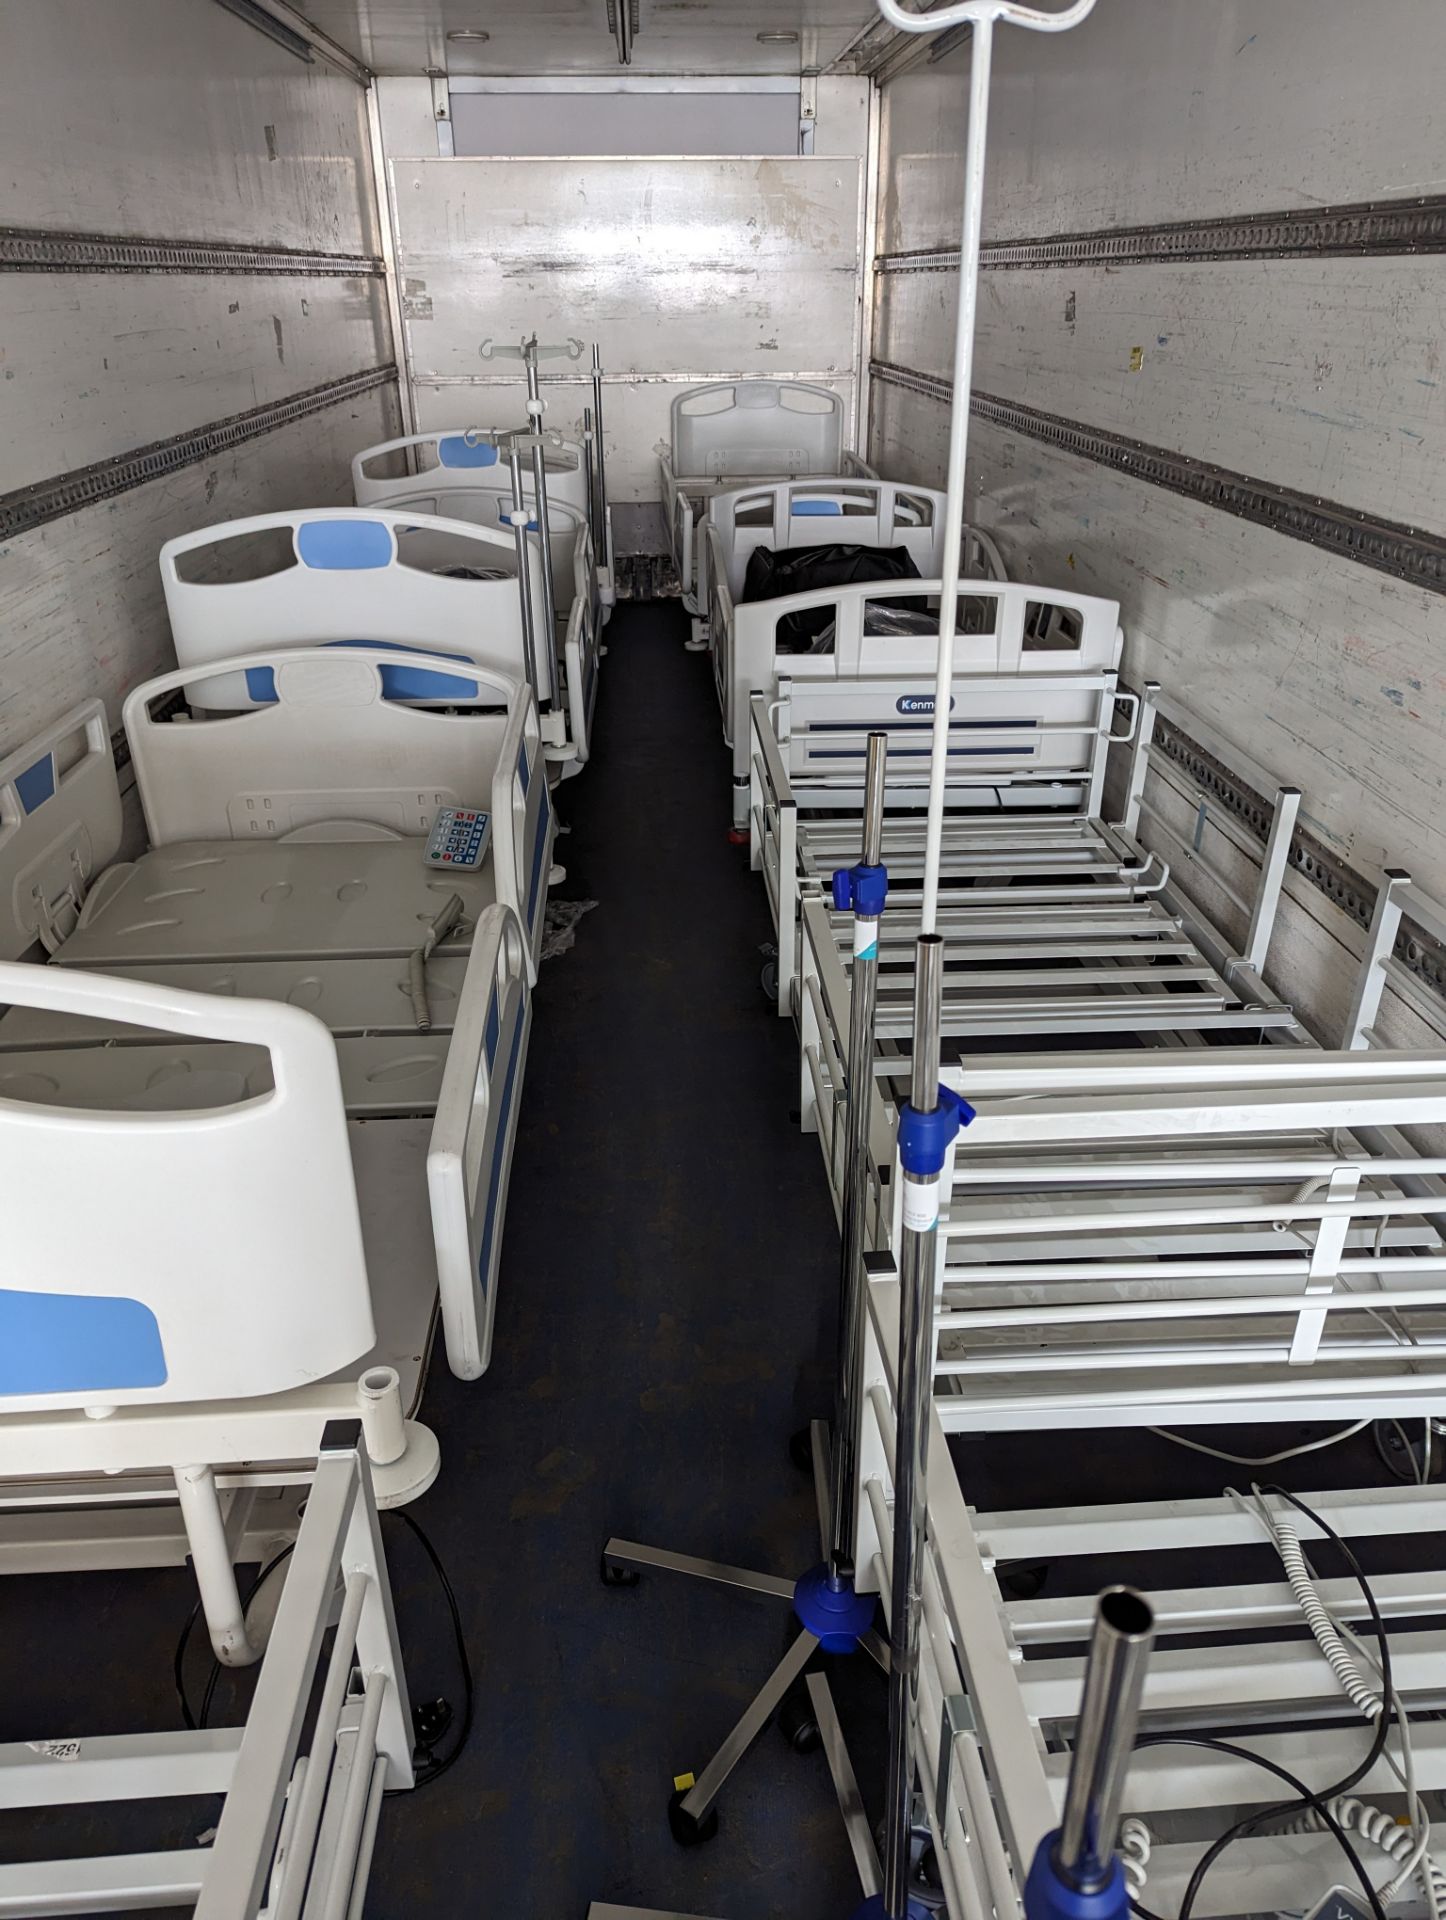 Oska Fully Adjustable Electric Hospital Bed - Image 3 of 3